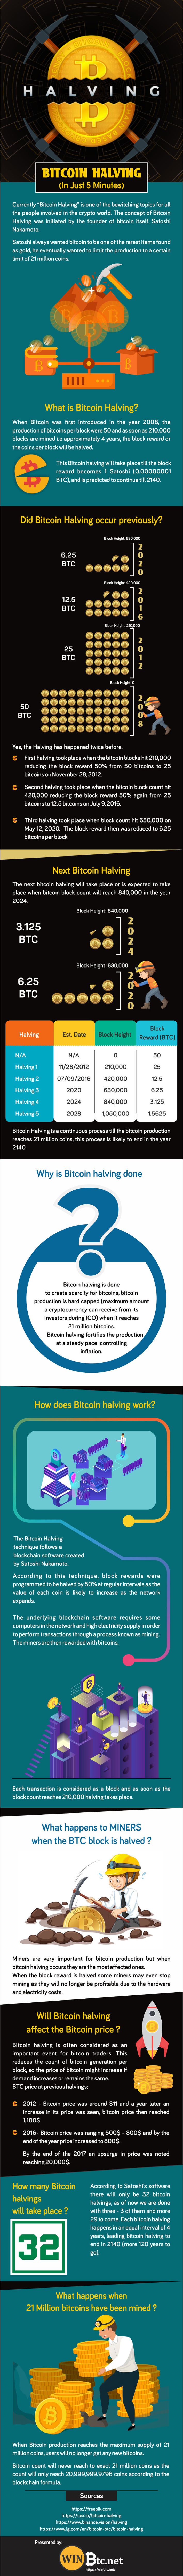 Bitcoin halving infographic